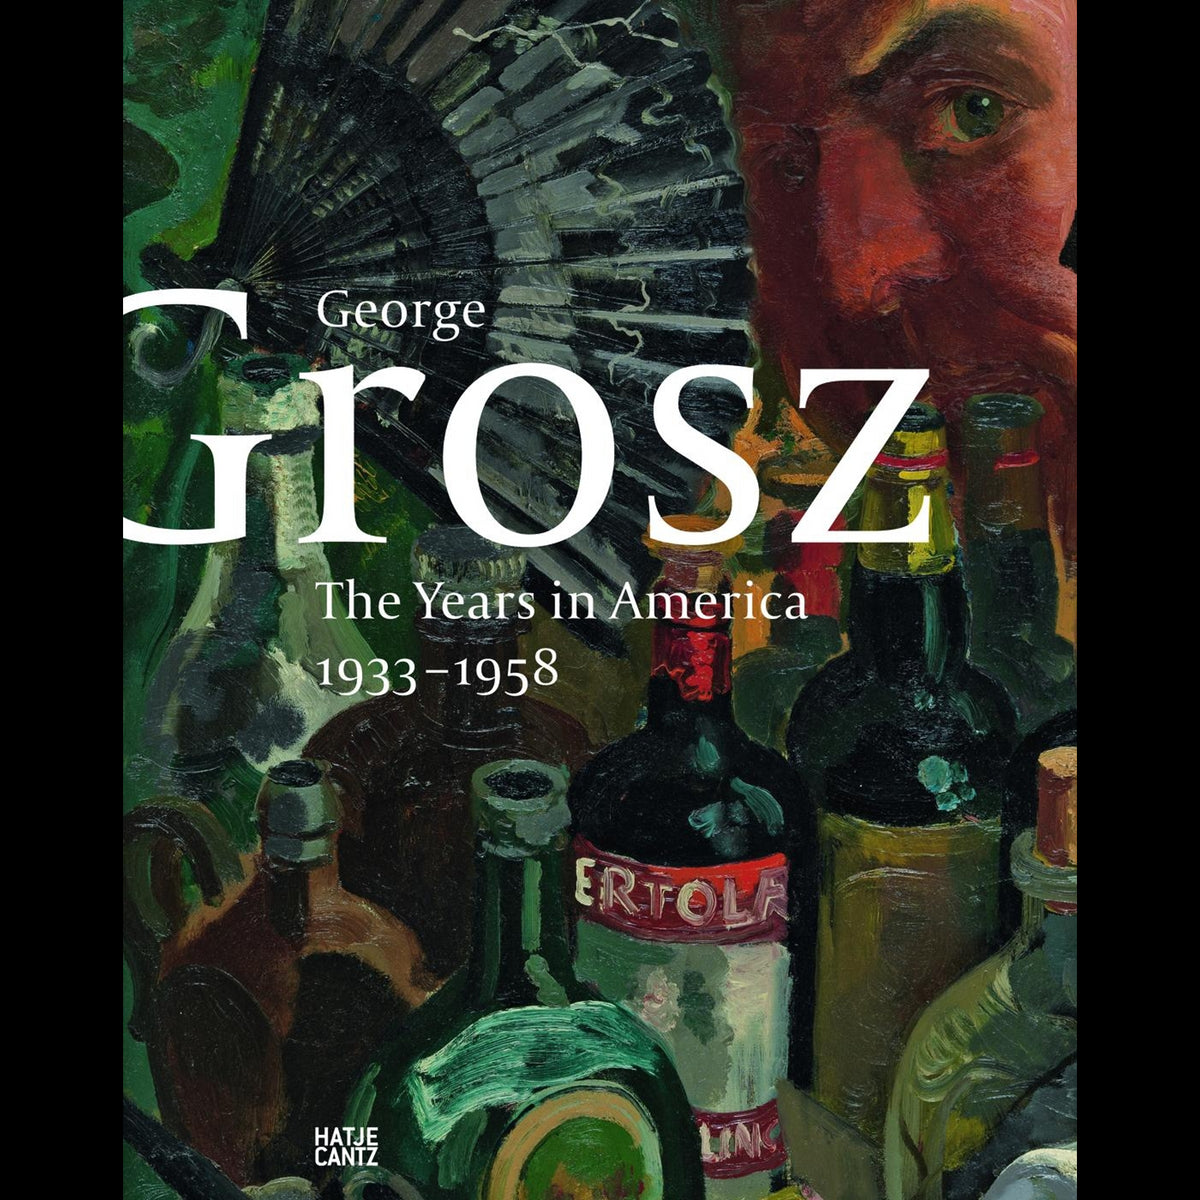 Coverbild George Grosz